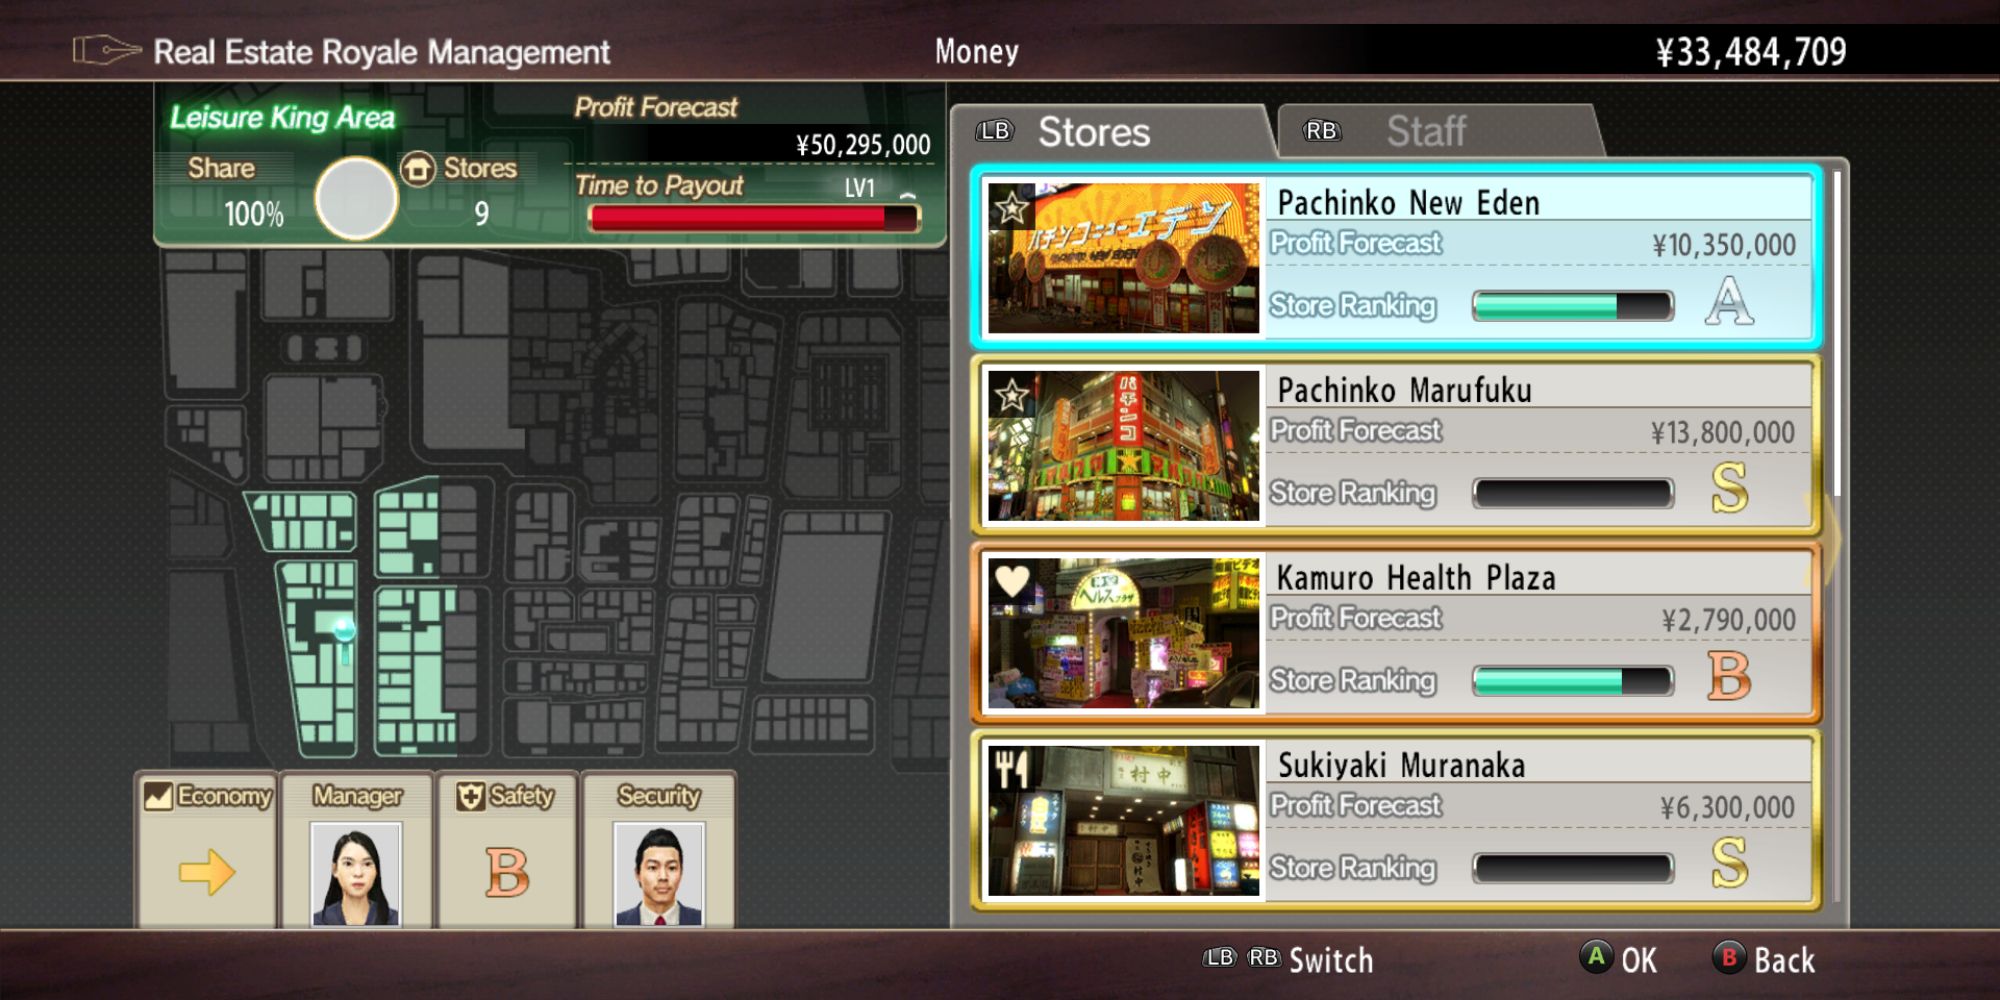 Yakuza 0 Screenshot Showing A List Of Leisure King Area Stores